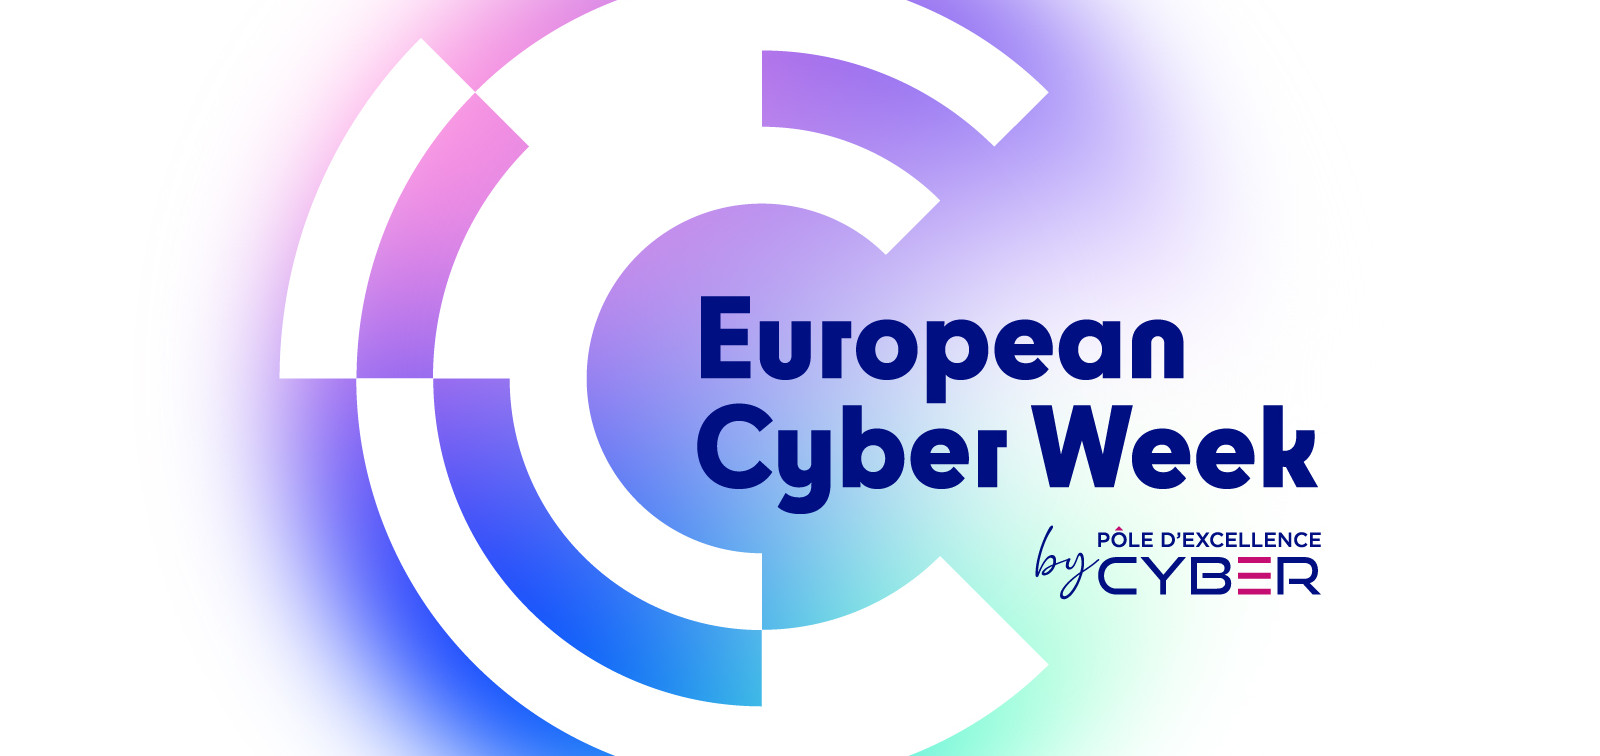 DIATEAM will take part in European Cyber Week in Rennes on November 21-23